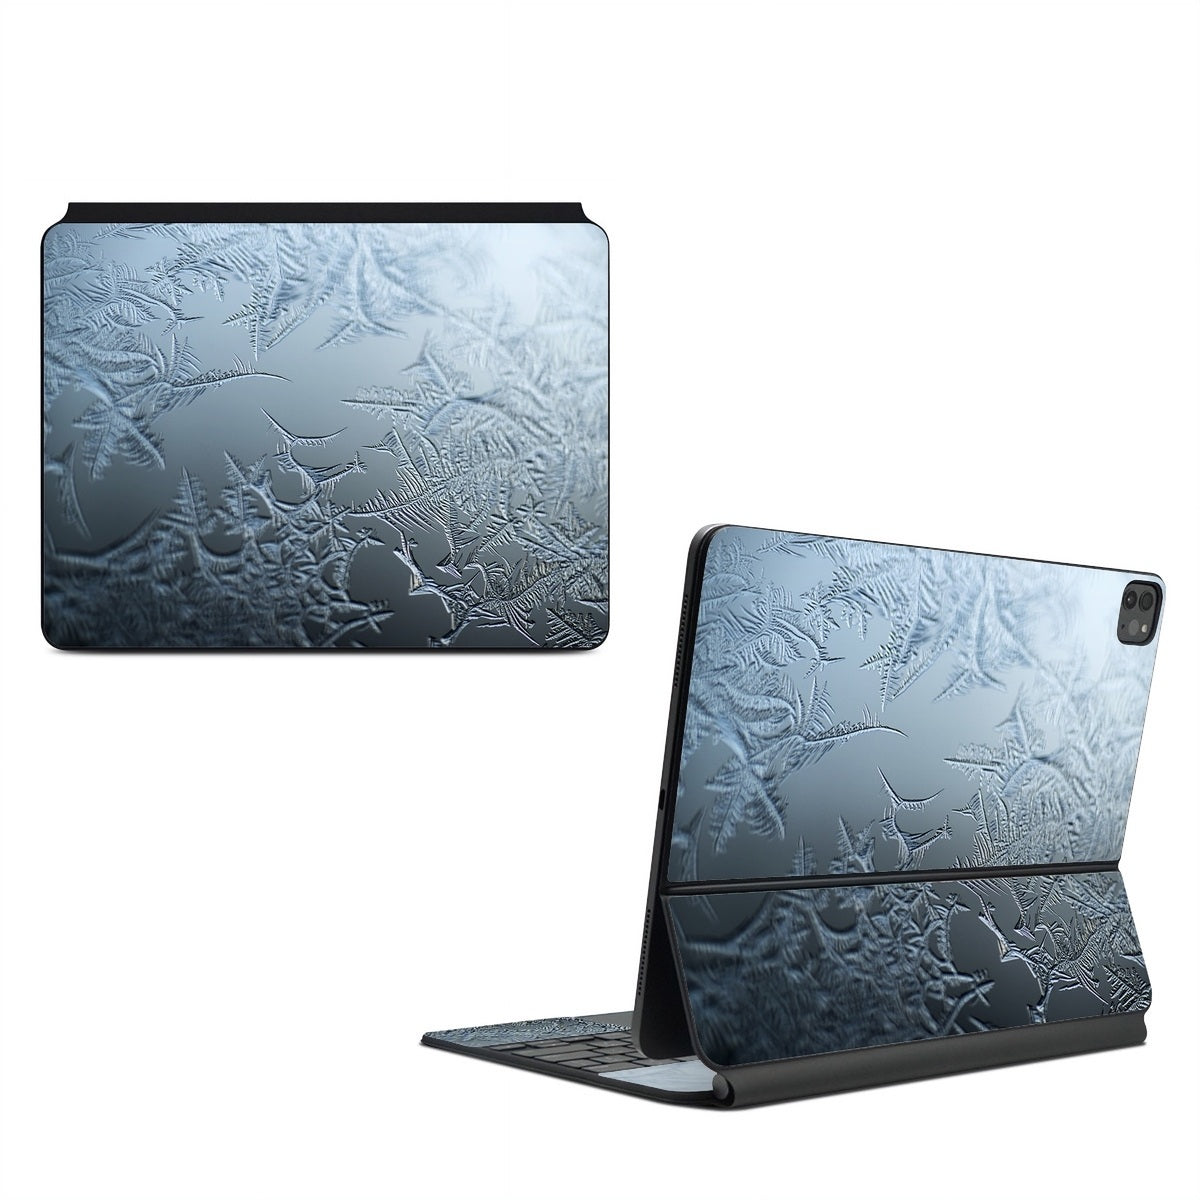 Icy - Apple Magic Keyboard for iPad Skin